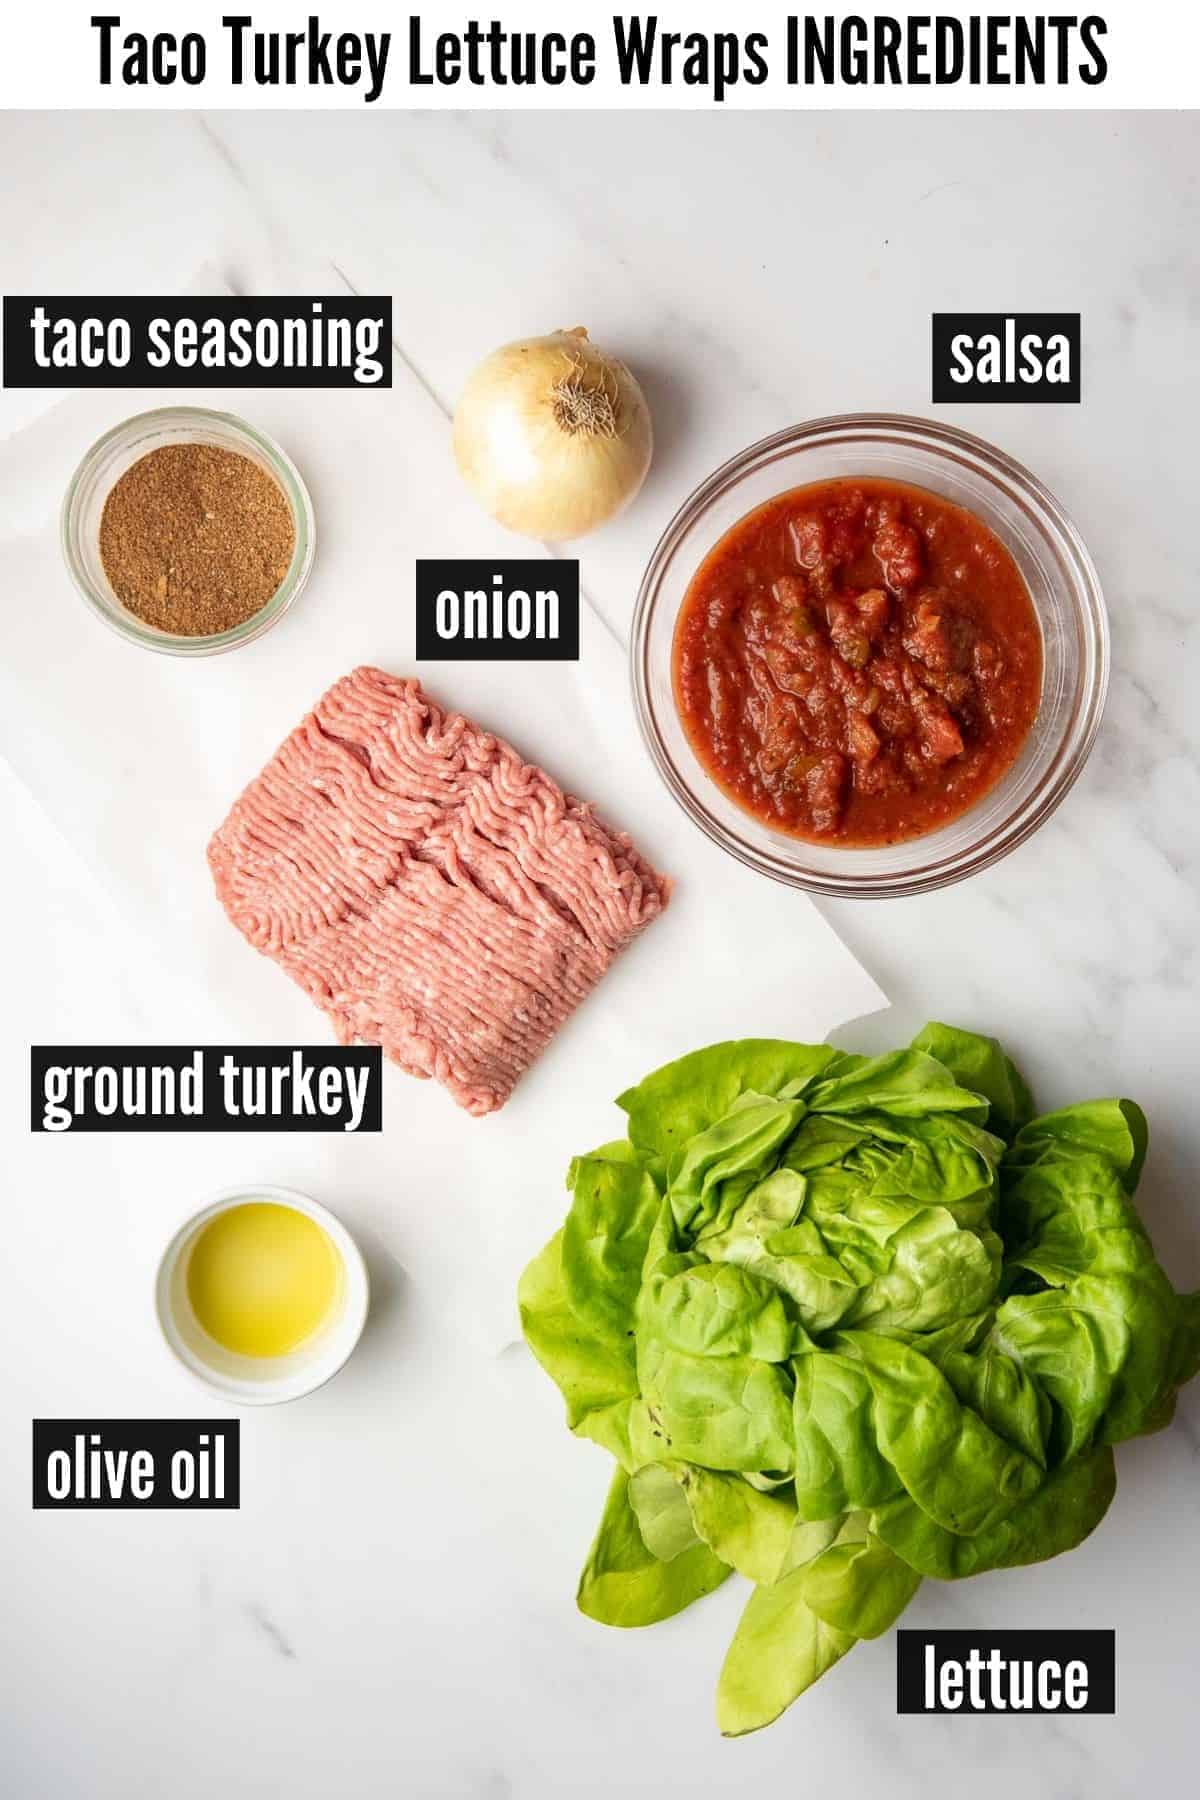 turkey lettuce wraps ingredients labelled